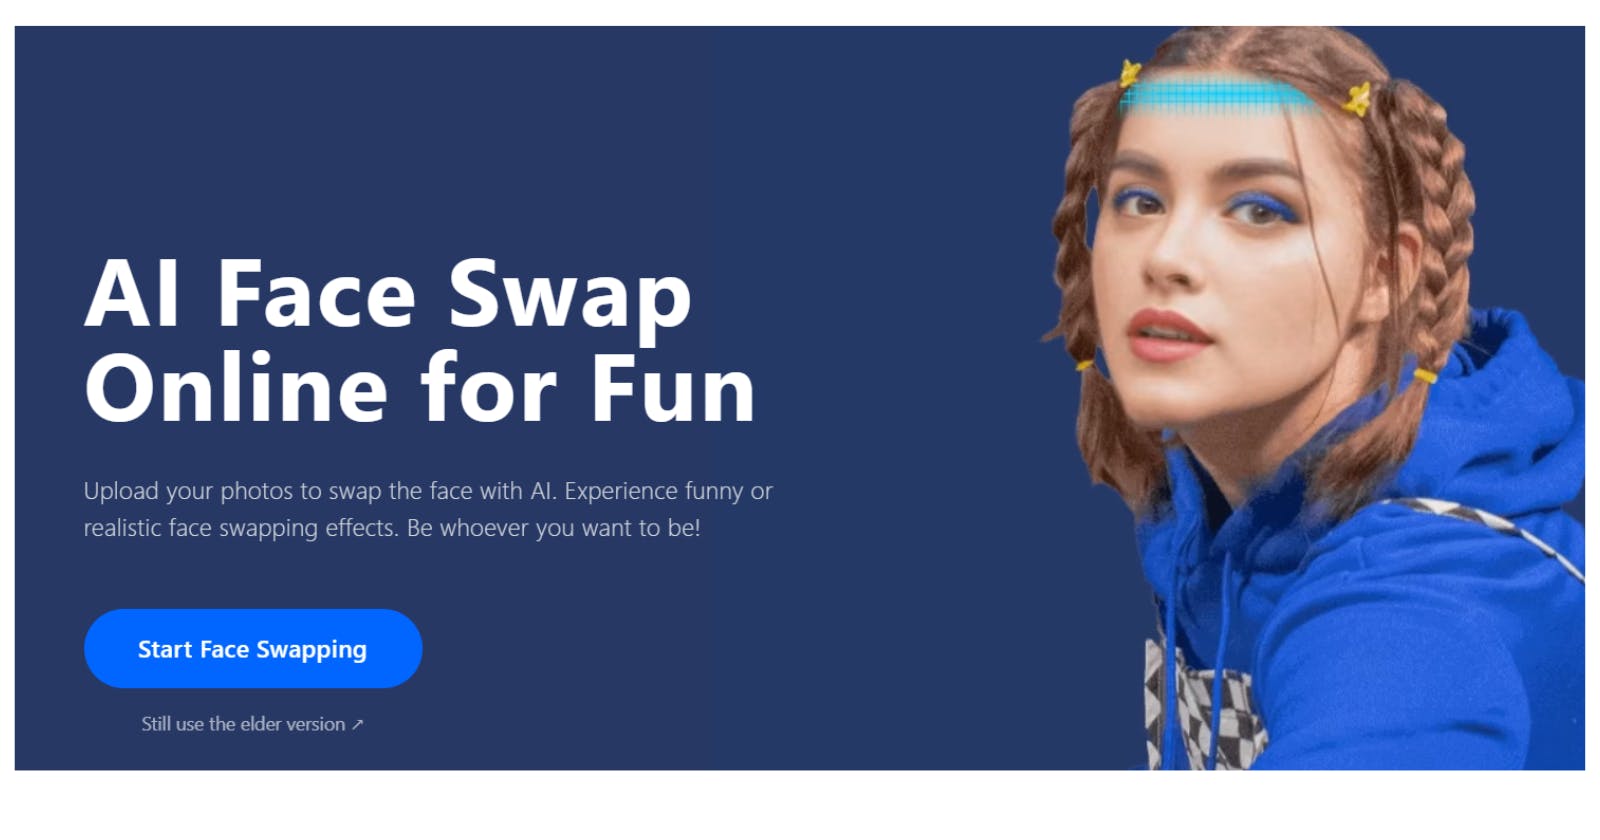 FaceSwapper - AI Face Swap Online for Fun